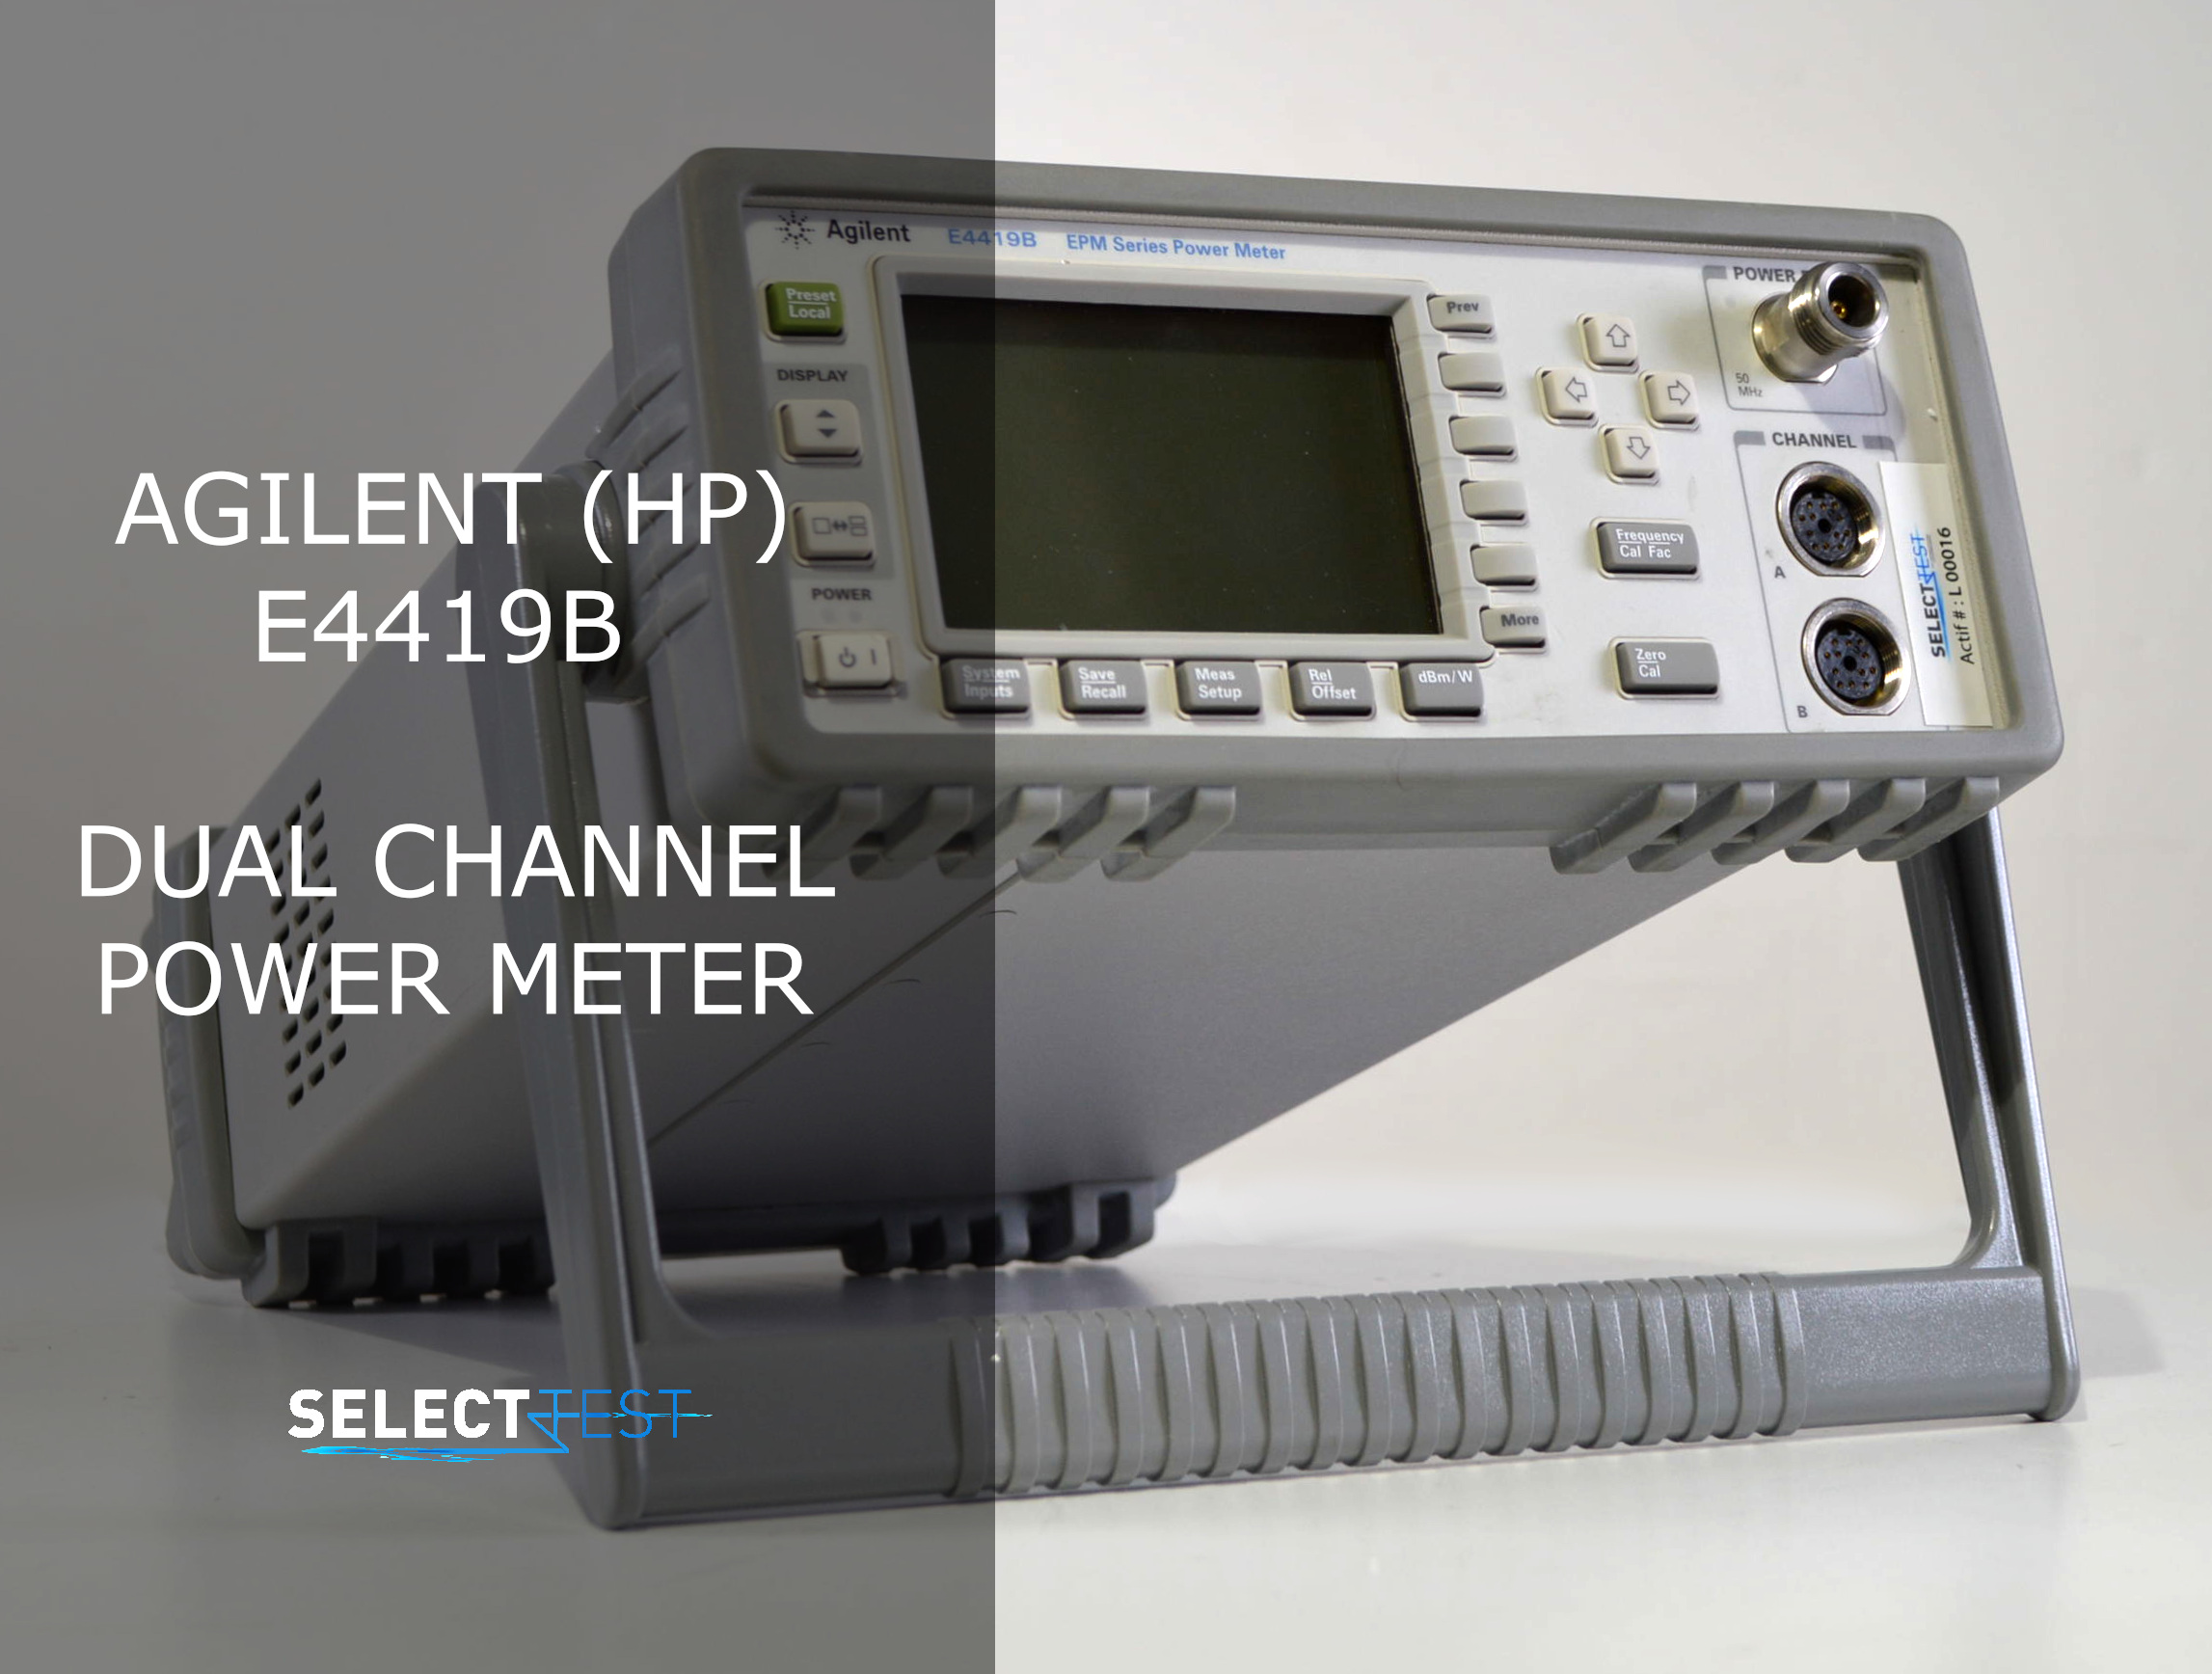 HP Idacom Pt500 Protocol Tester E4095C for sale online 